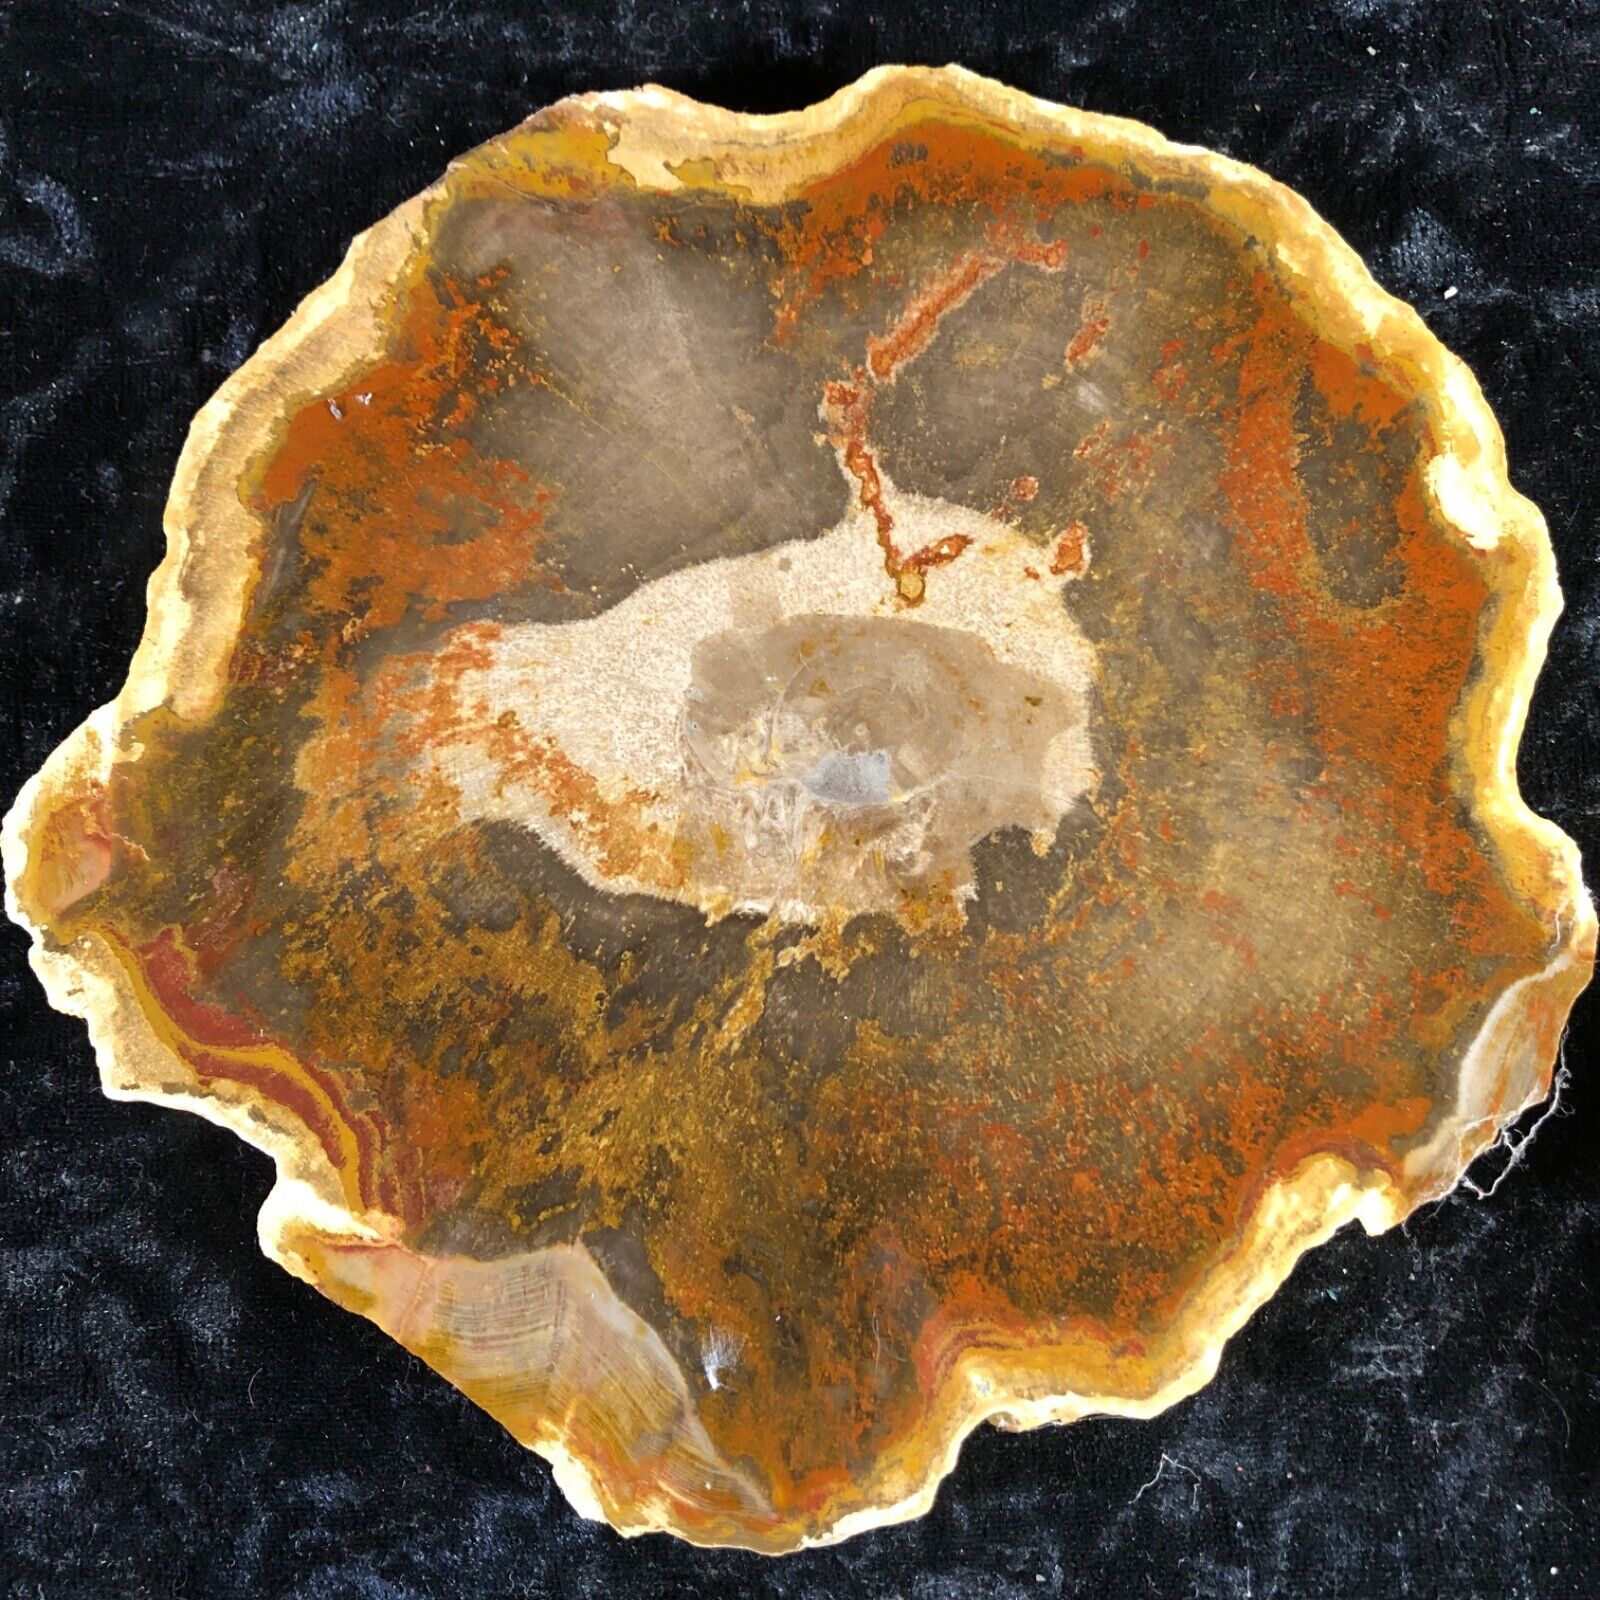 Polished Agathaoxylon Chinchilla, Australia 6.75”x6.25” Cretaceous Orallo Fm.